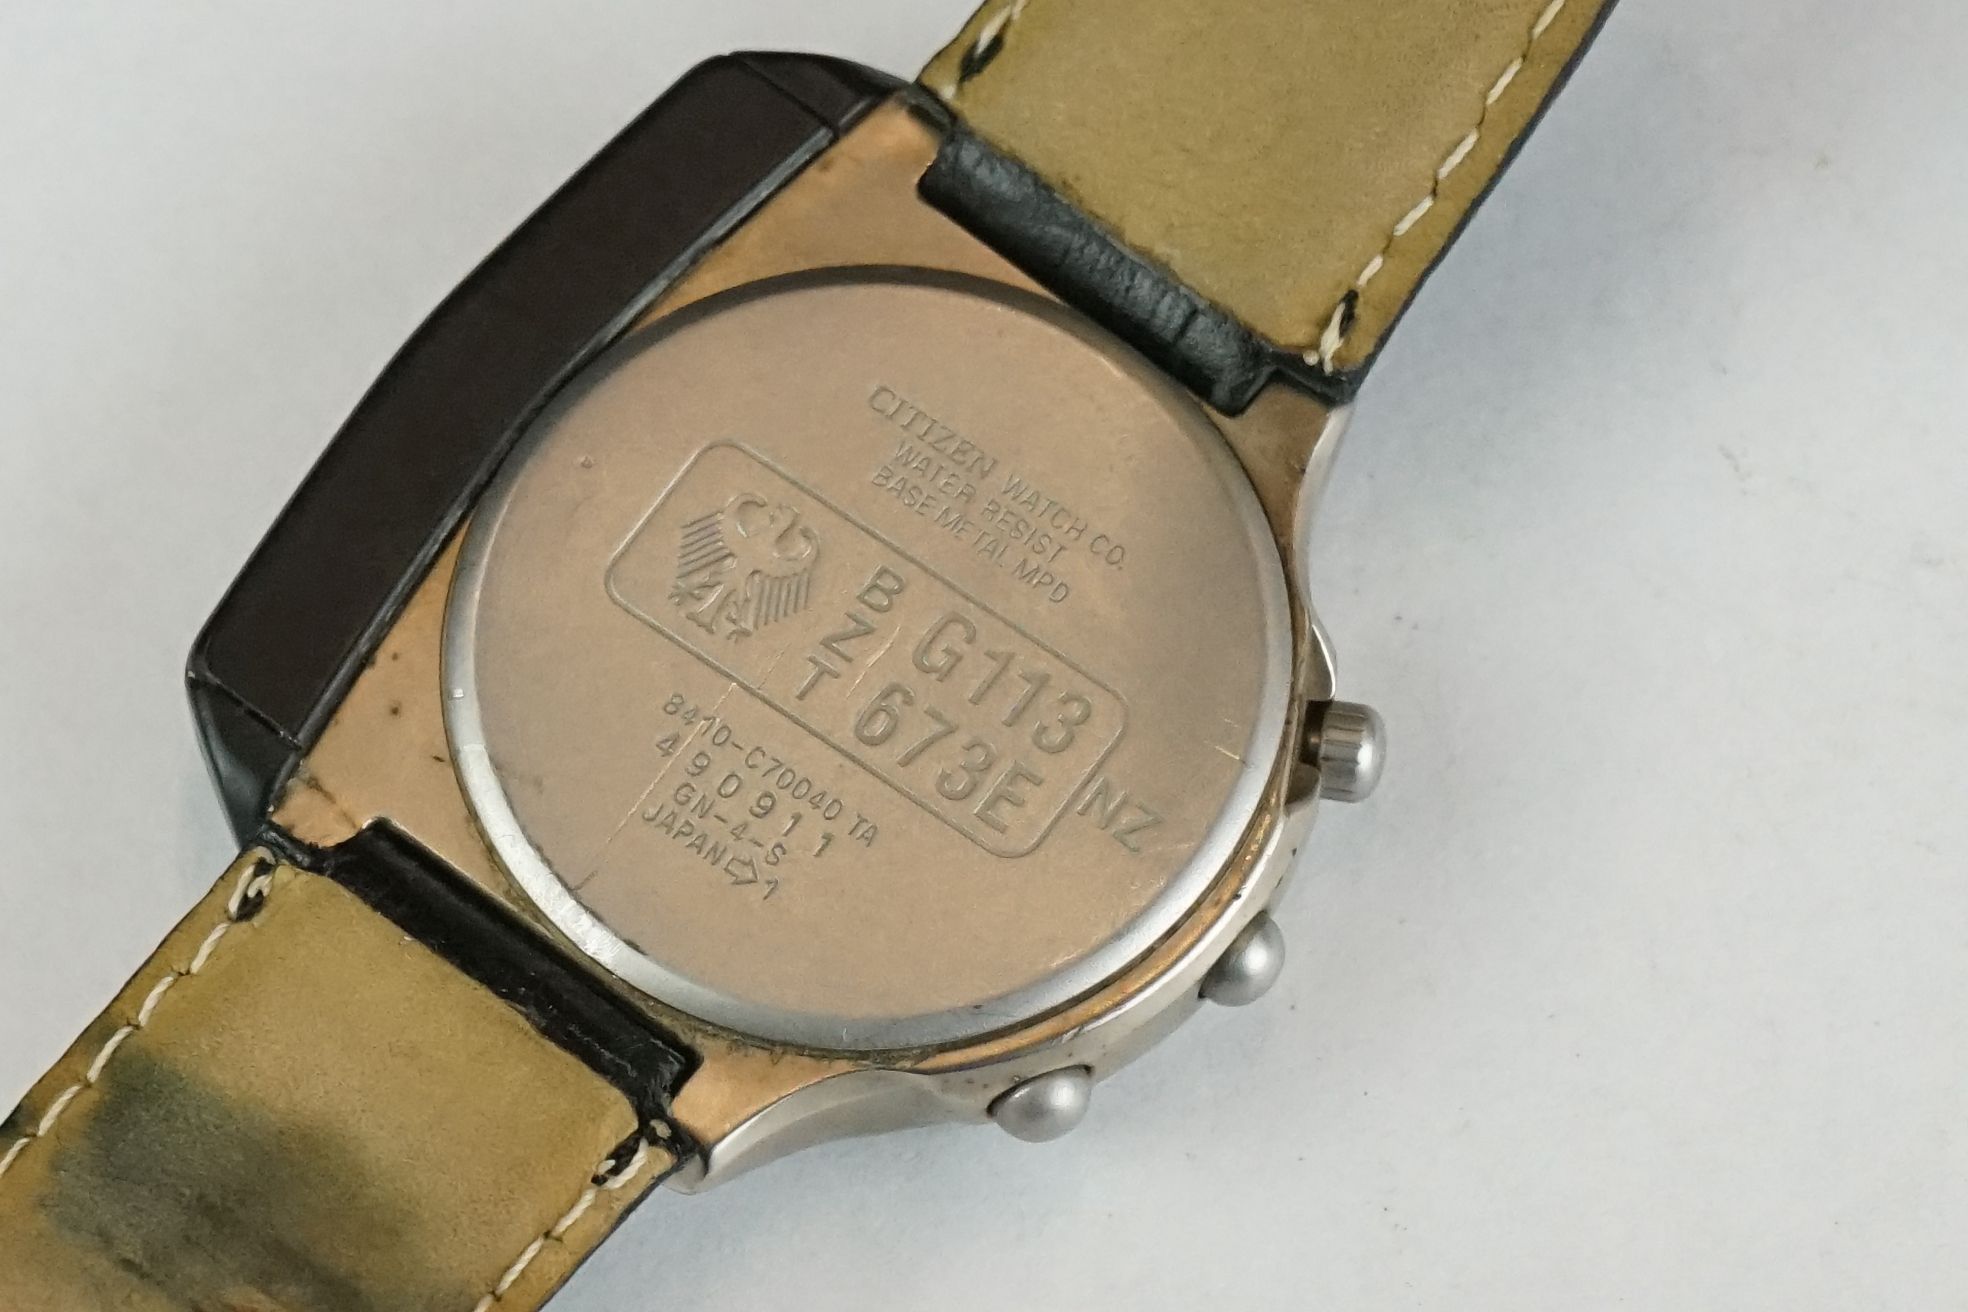 Vintage Citizen Spacemaster gentleman's watch in original case with instructions - Image 4 of 7